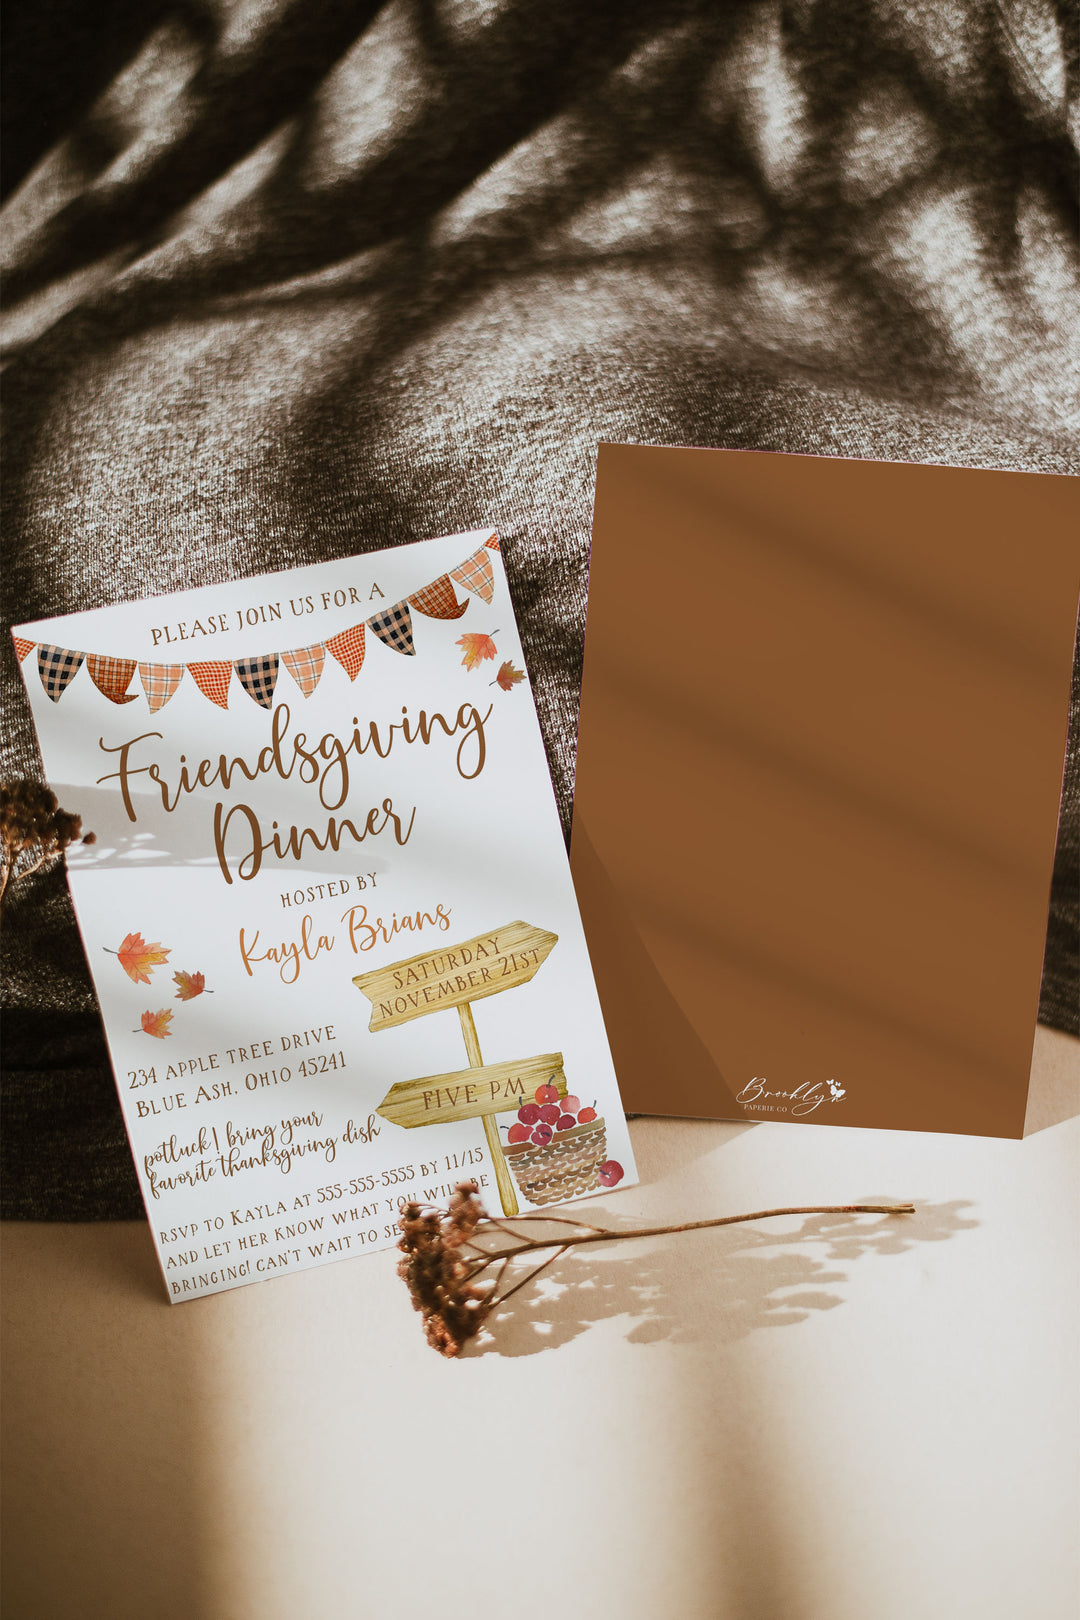 Cute Friendsgiving Dinner Invitation - Fall Inspired Friendsgiving Invitation - Friendsgiving Party Supplies - Thanksgiving with Friends